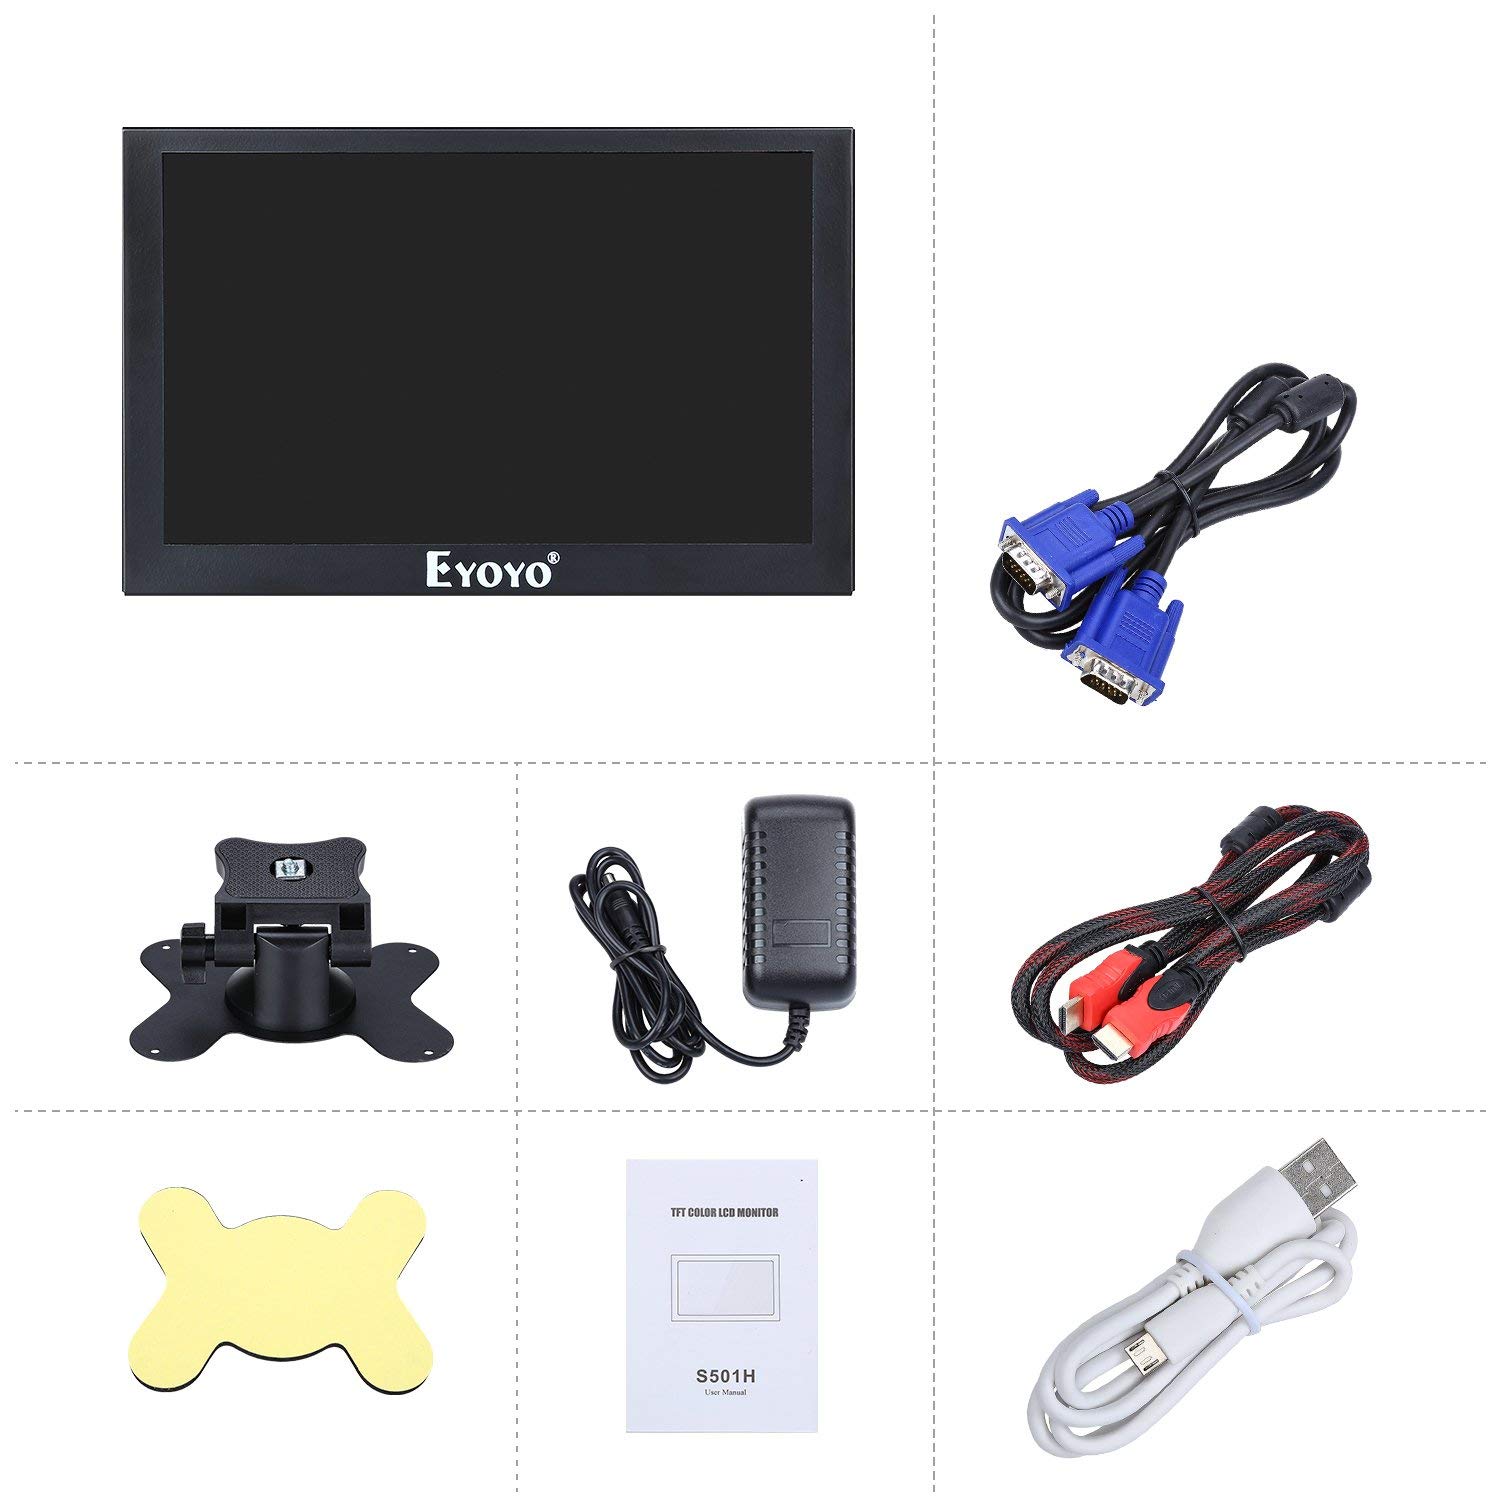 Eyoyo 5 inch Mini Monitor HD 800x480 16:9 TFT LCD Screen Display with BNC VGA AV HDMI Input, Built-in Speaker